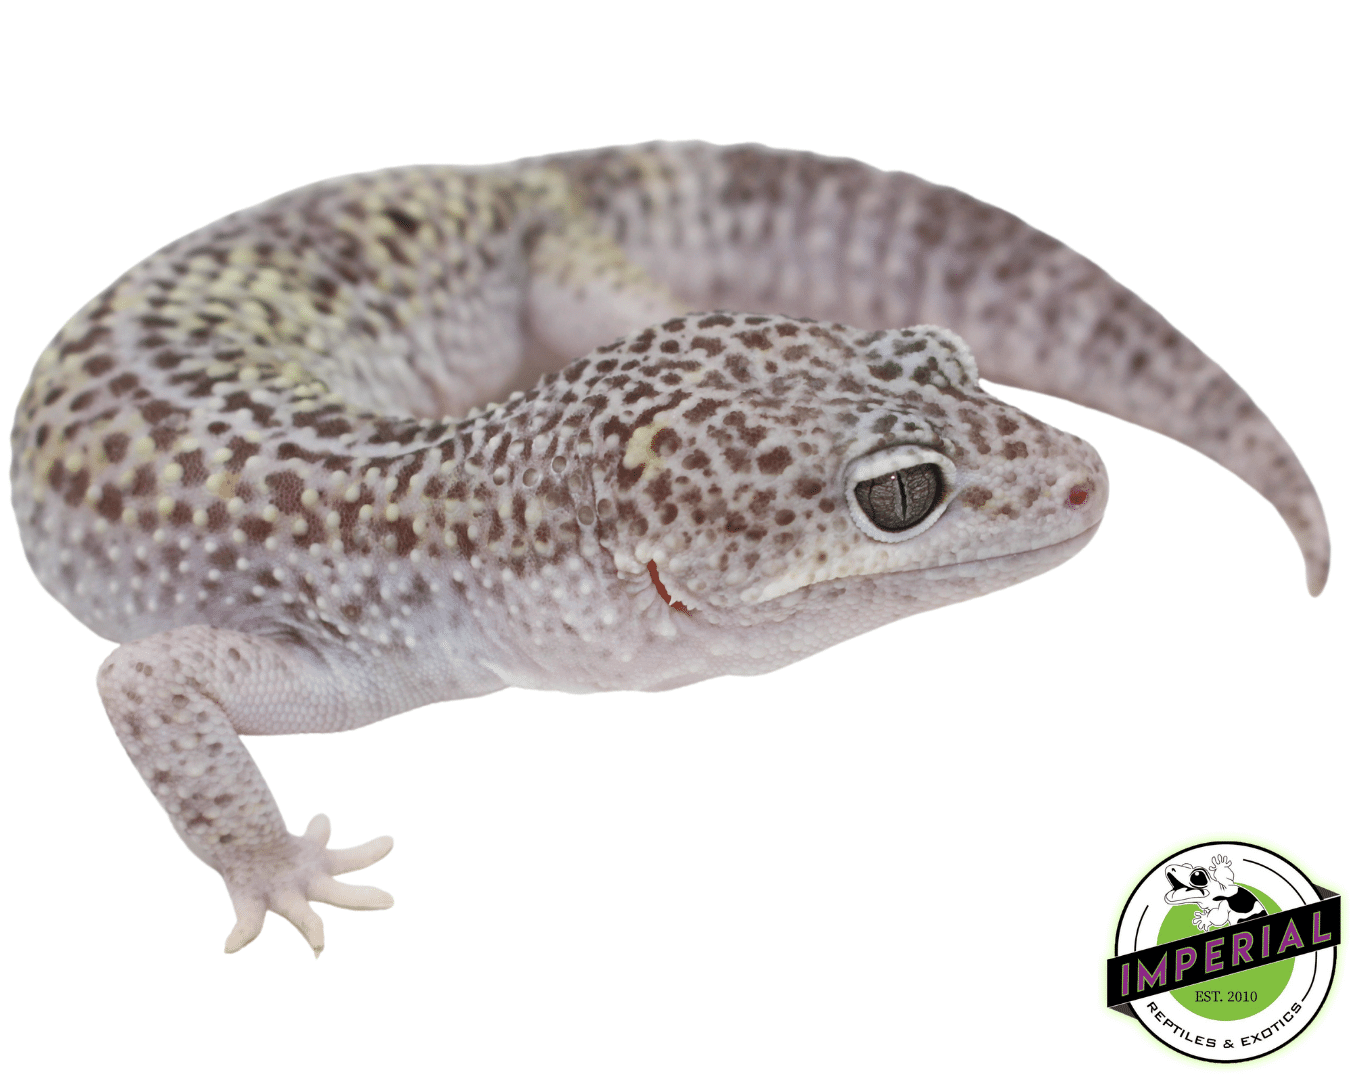 mack snow jungle leopard gecko for sale, buy leopard geckos online near me at cheap prices